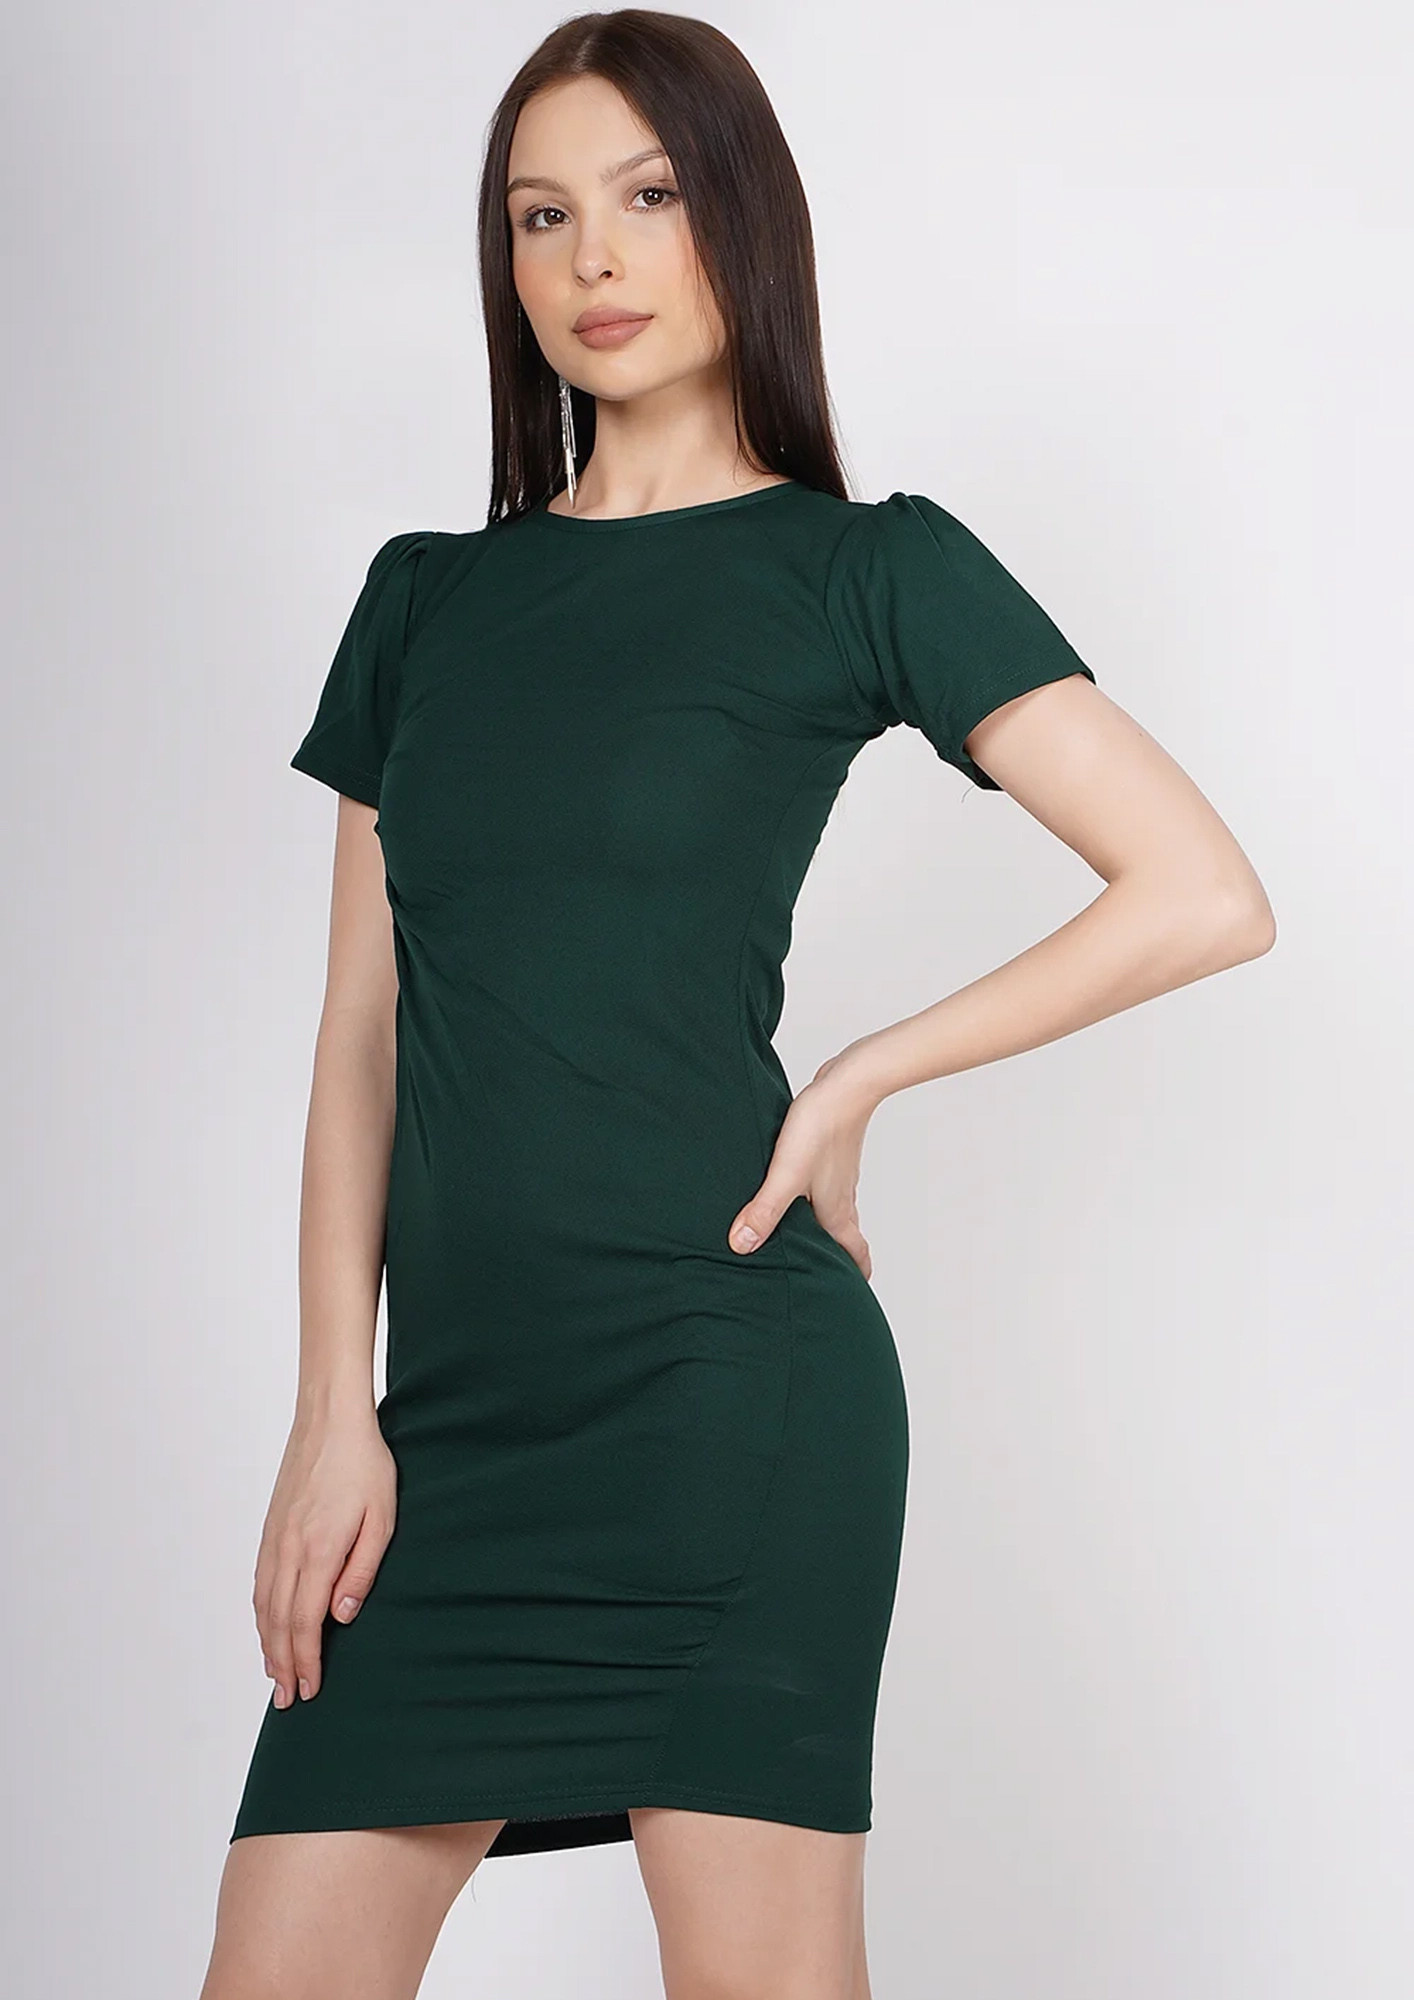 TAGGD Emerald Green Bodycon Half Sleeve Dress